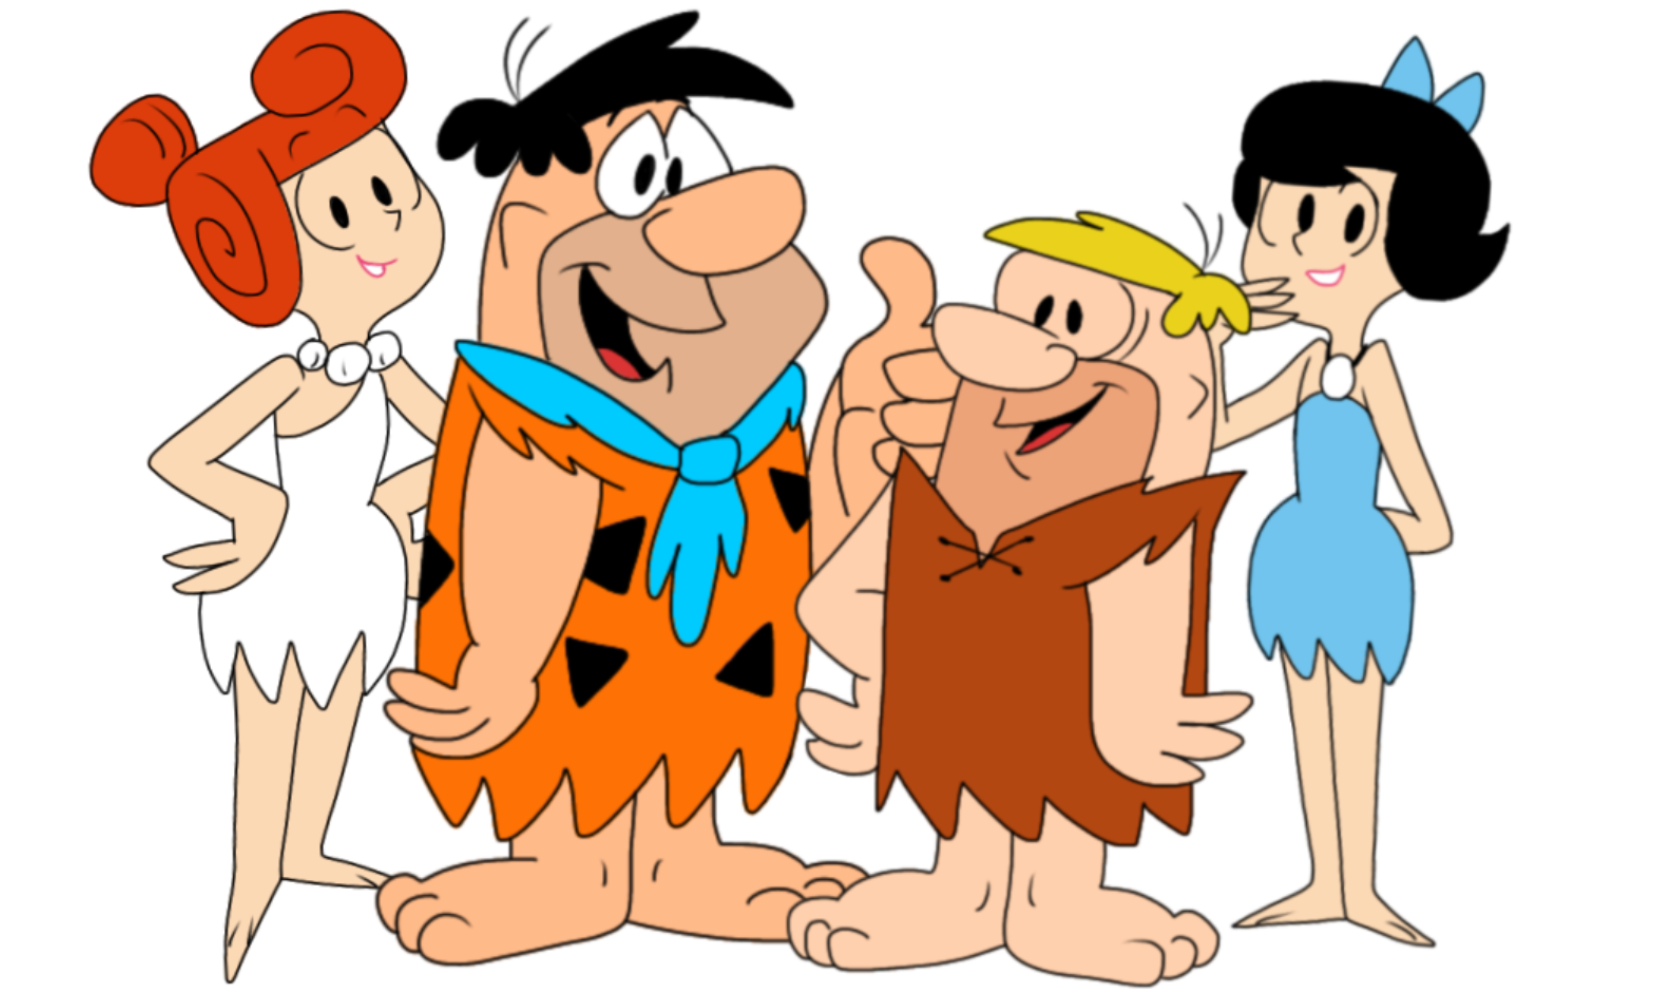 The Flintstones and Rubbles (Hanna Barbera) by mcdnalds2016 on